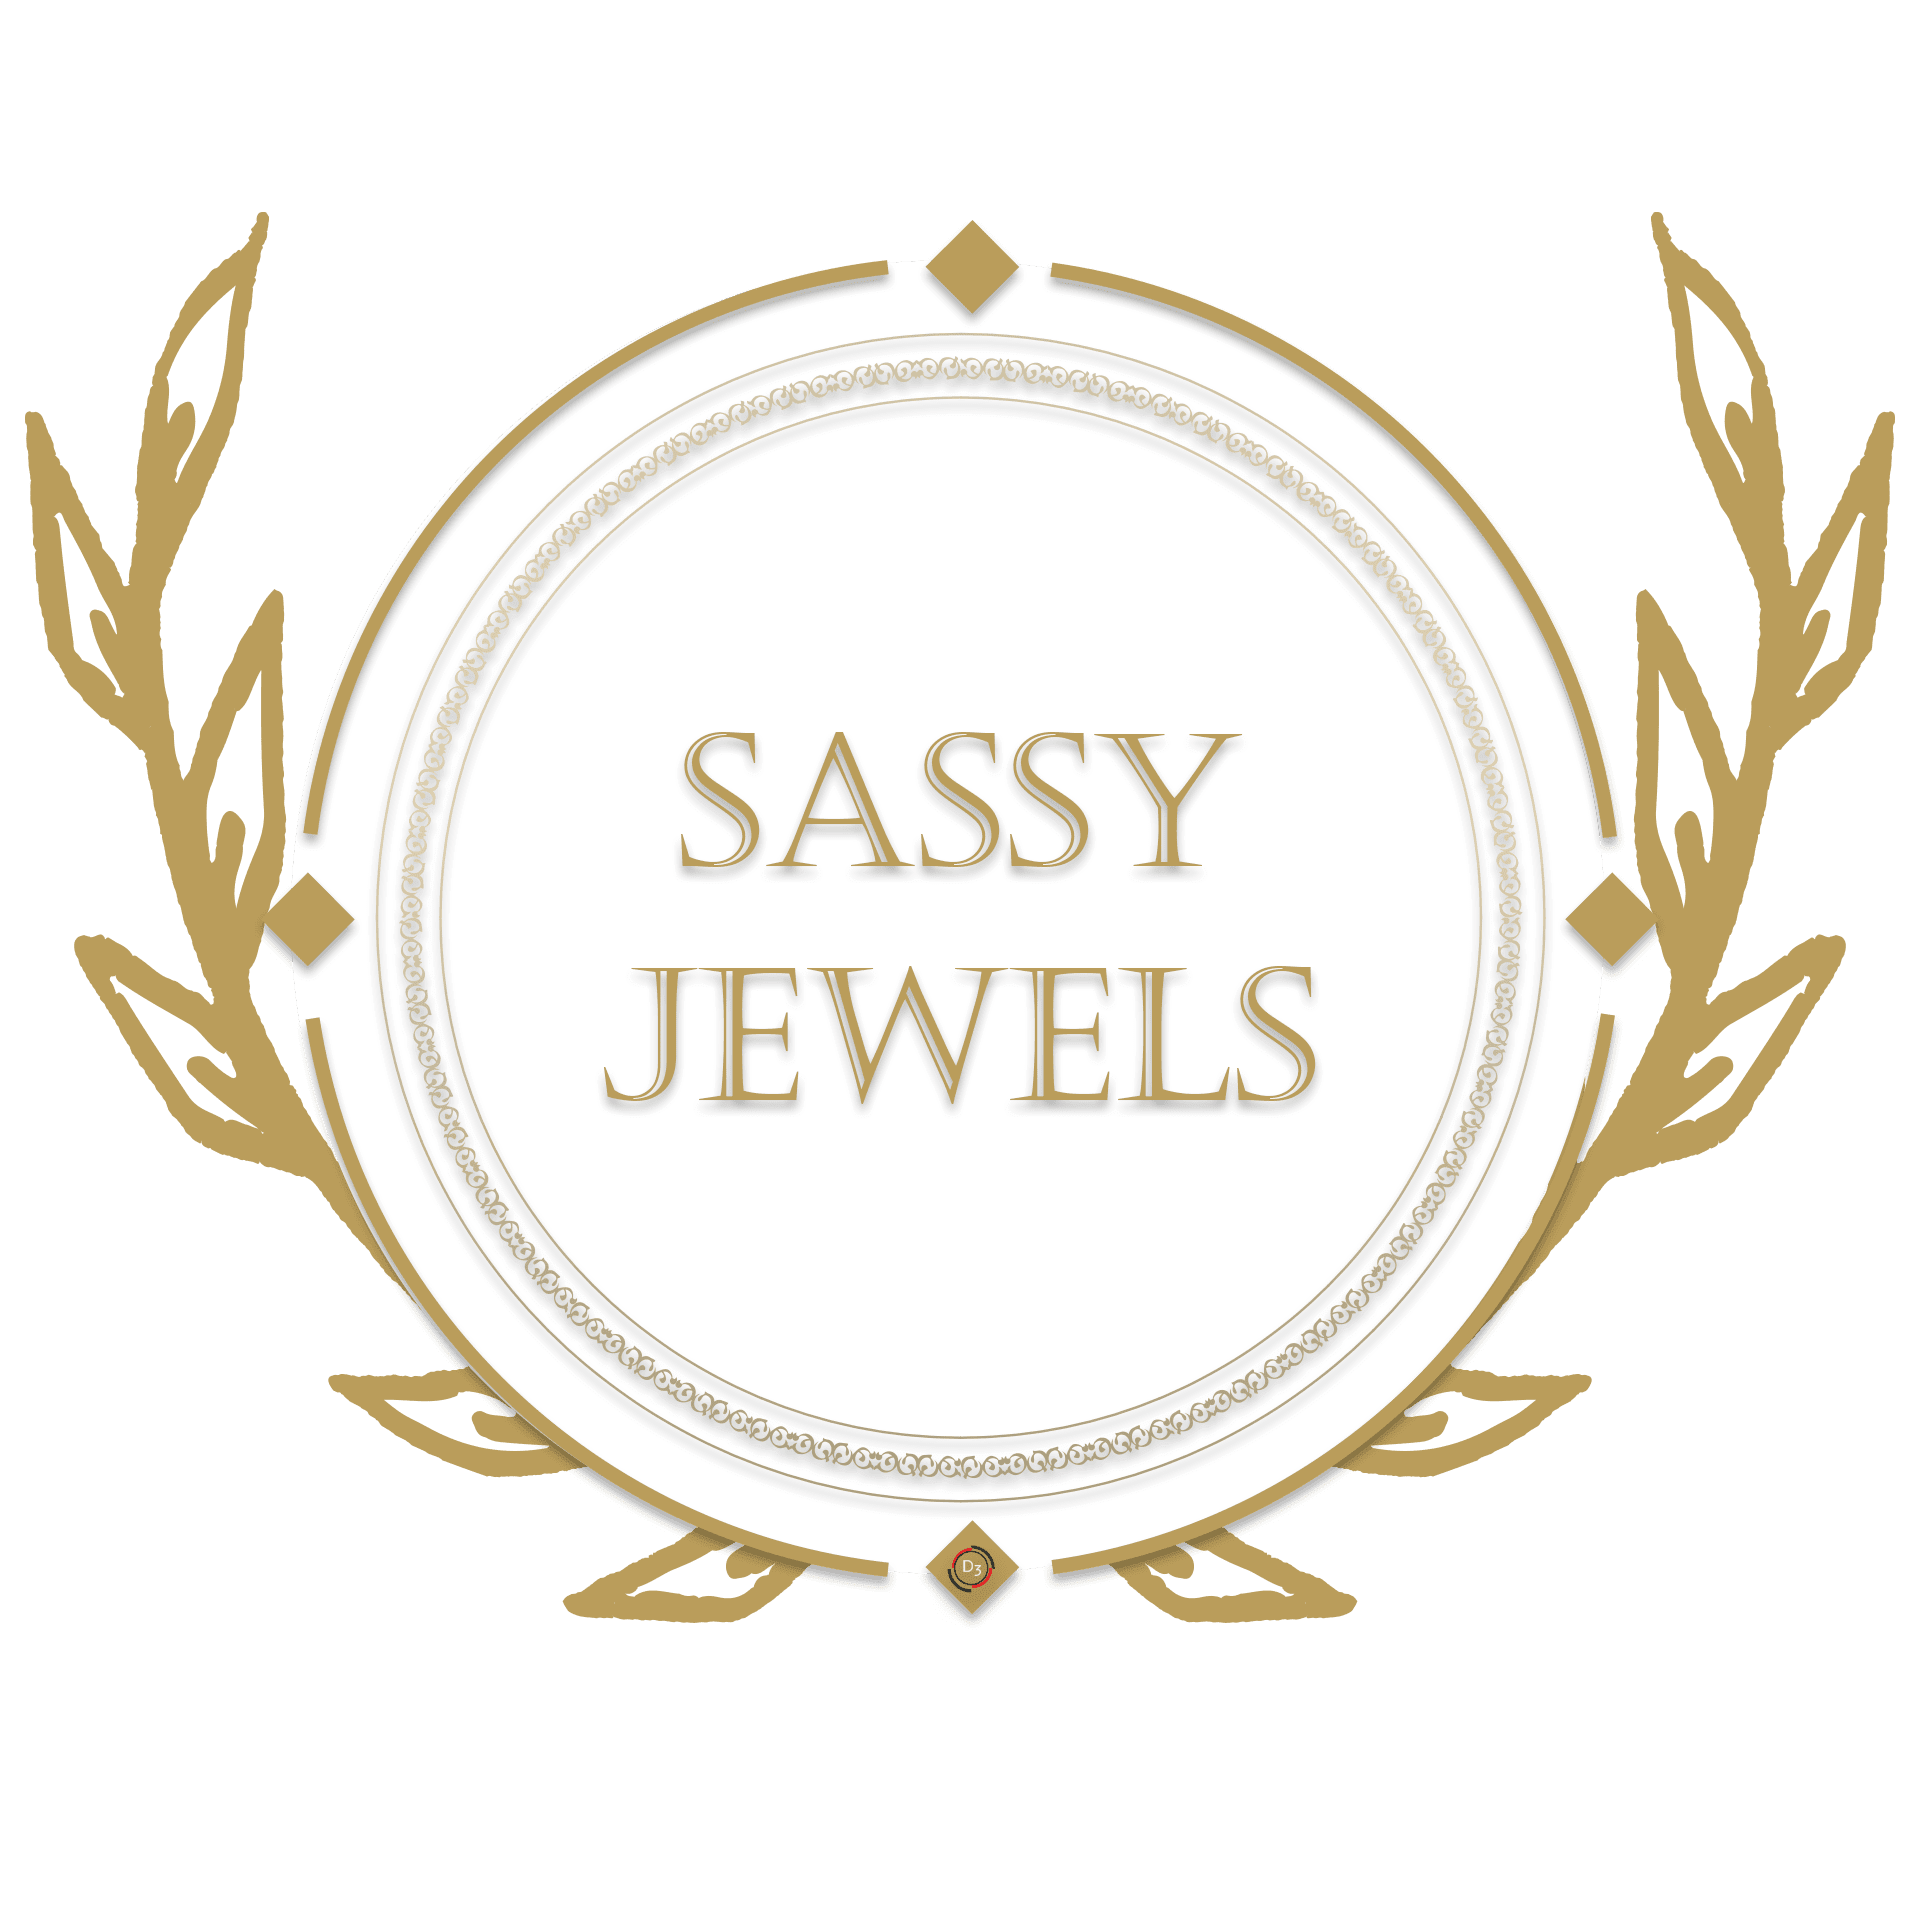 Sassy Jewels